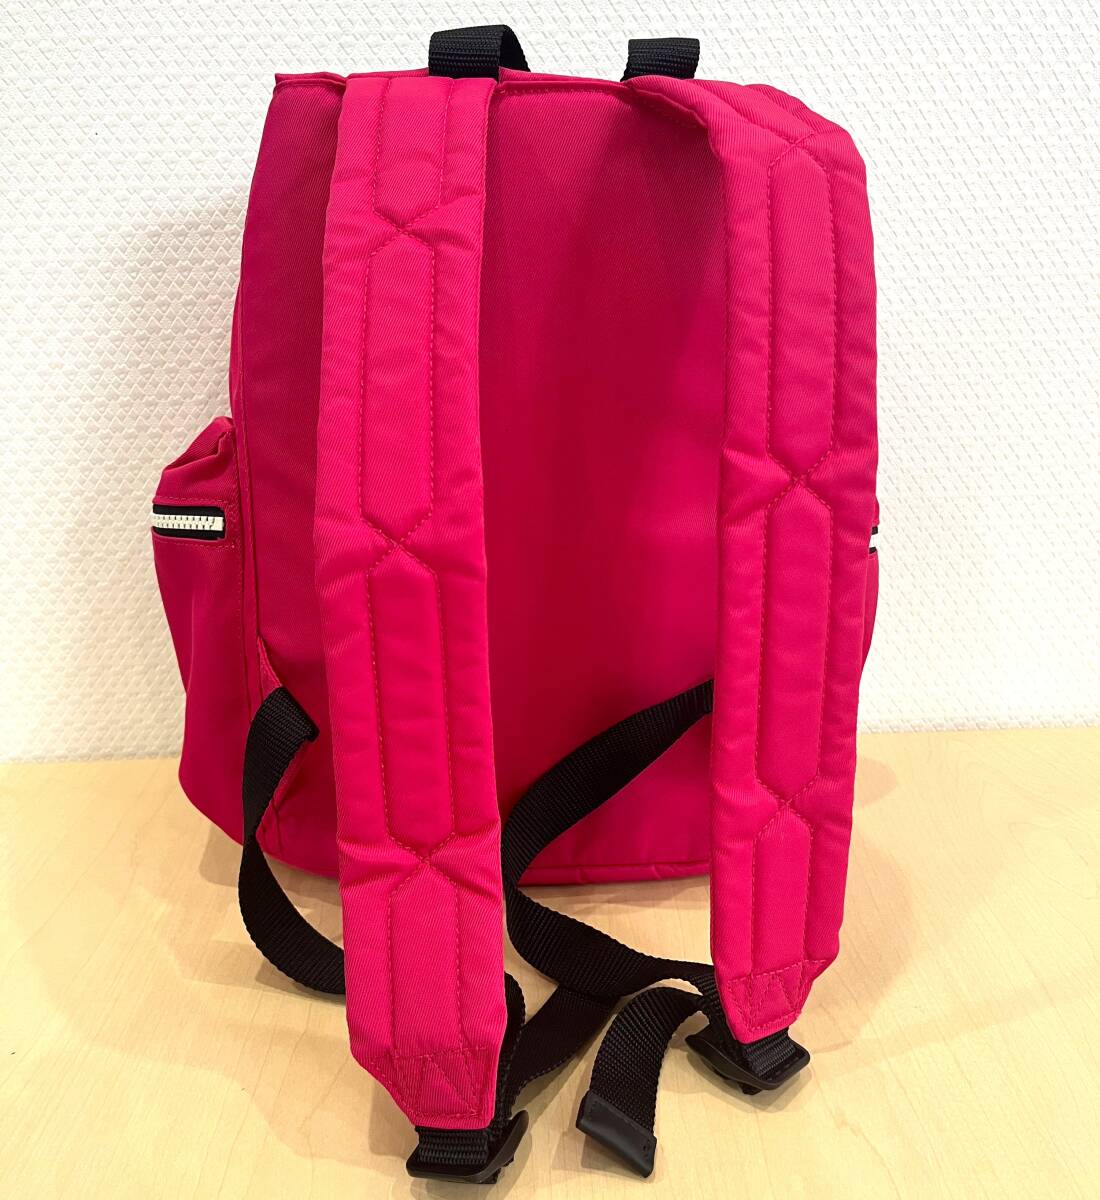  unused * beautiful goods HUNTER Hunter rucksack back ORIGINAL TOPCLIP BACKPACK backpack pink /3138